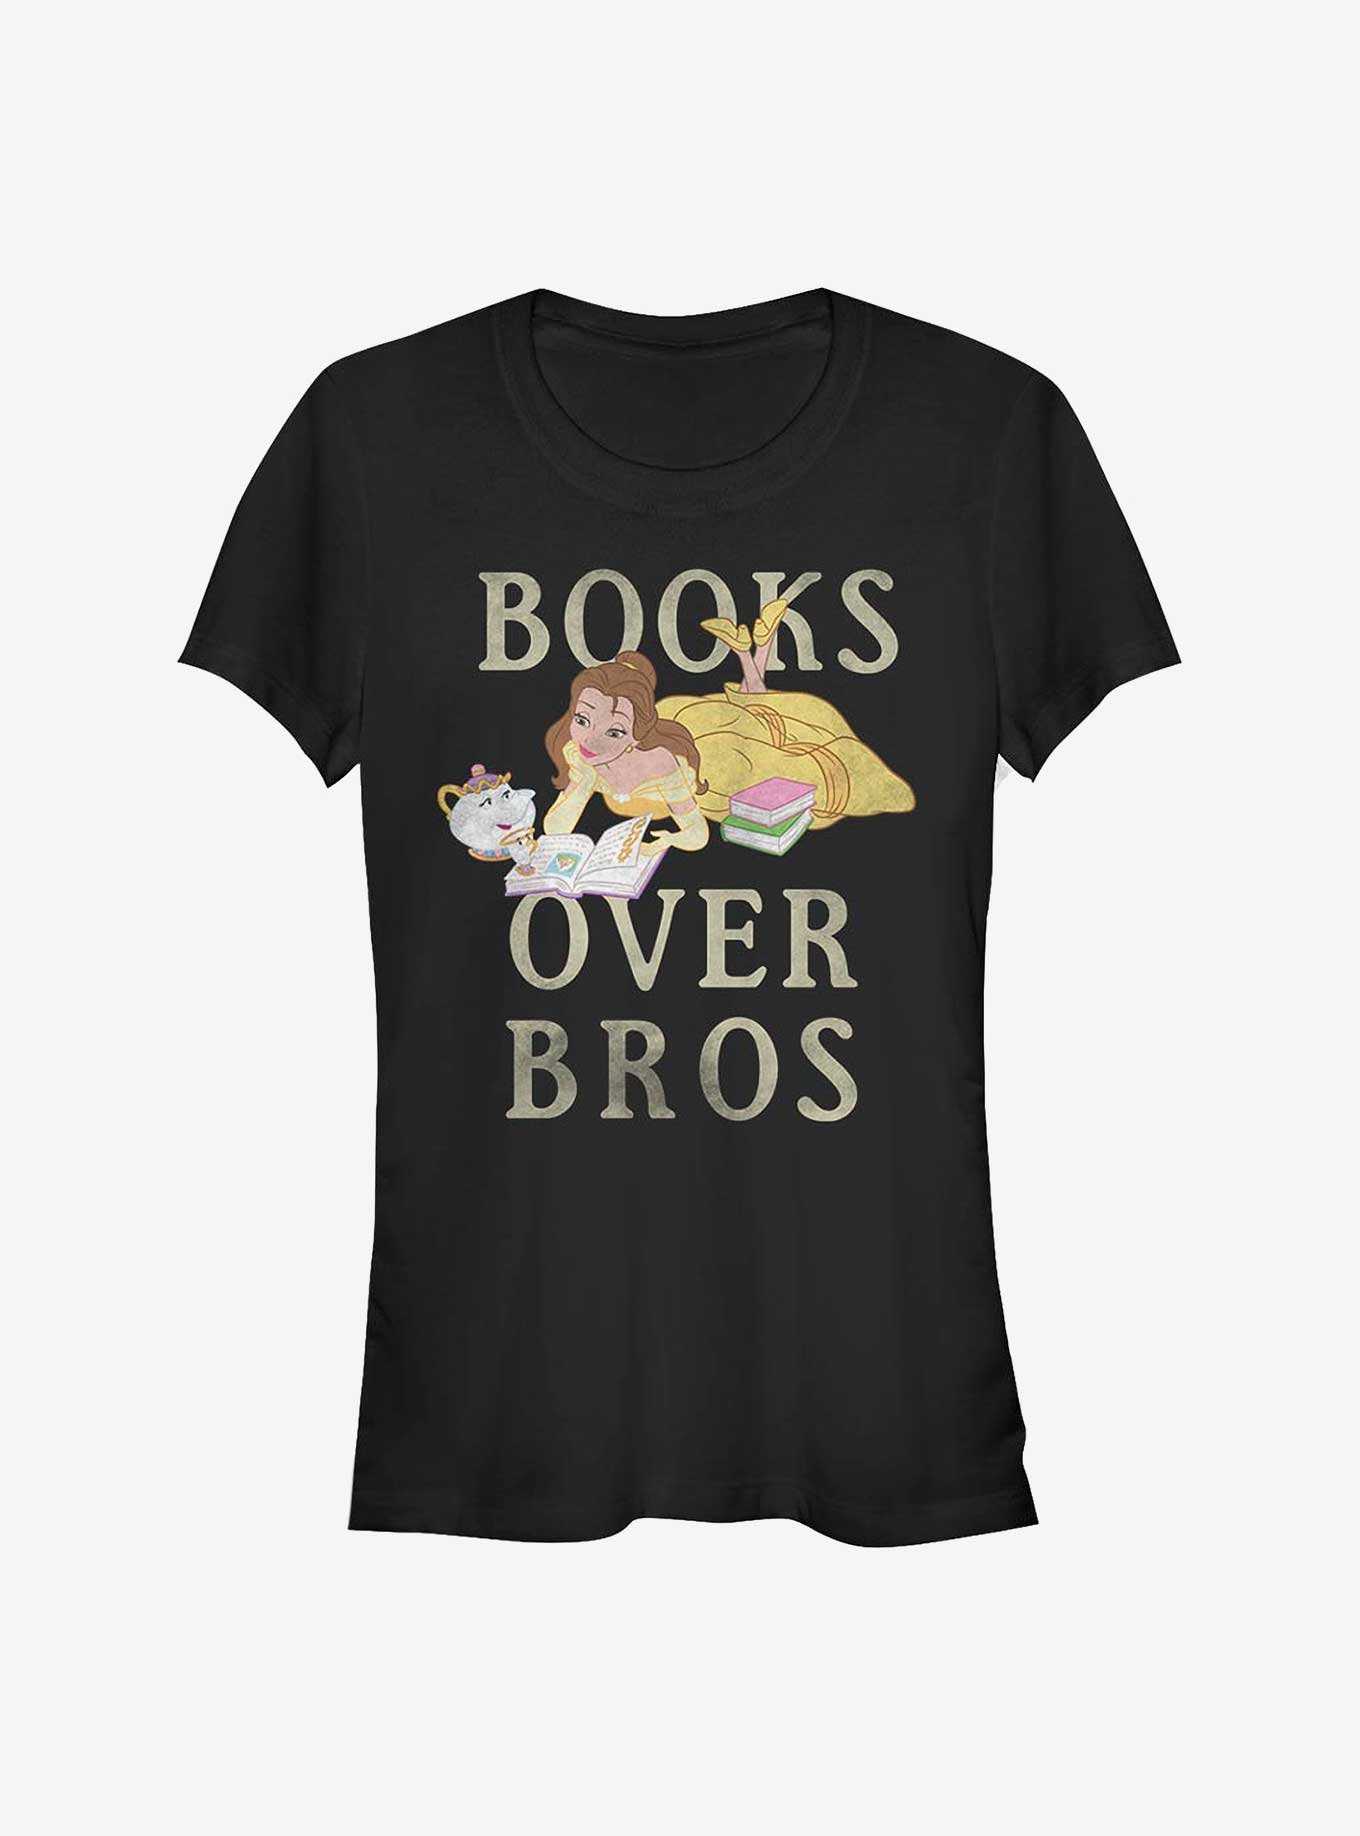 Disney Beauty Beast Books Over Bros Girls T-Shirt, , hi-res